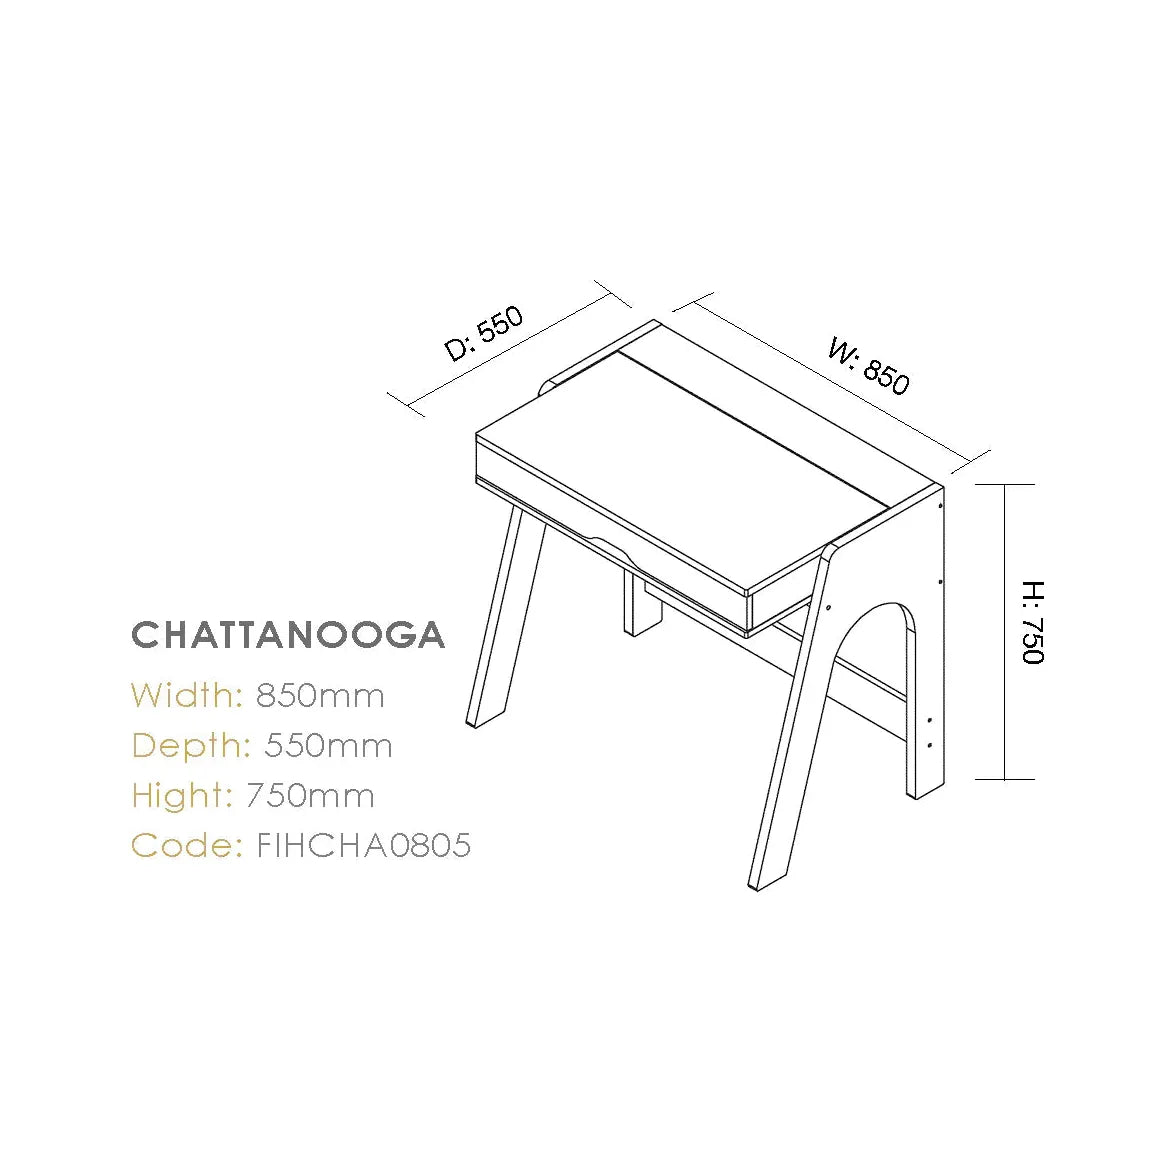 Chattanooga Desk